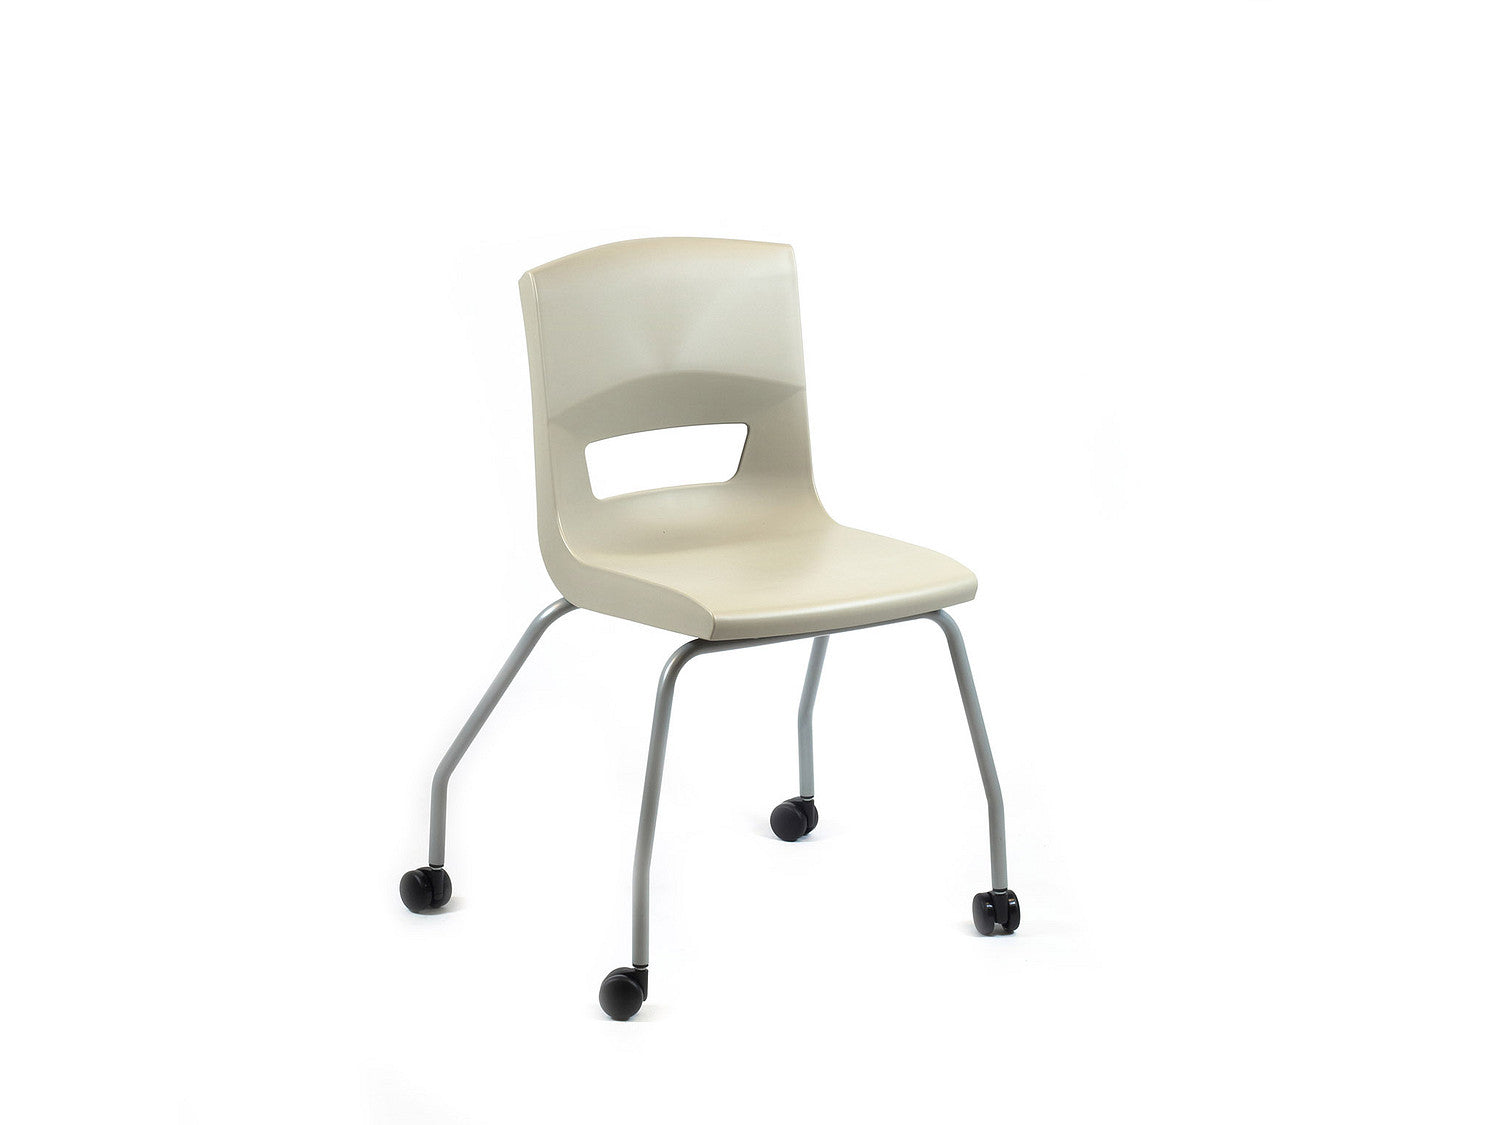 Postura 4 legs on castor unique stlye classroom chair ash grey